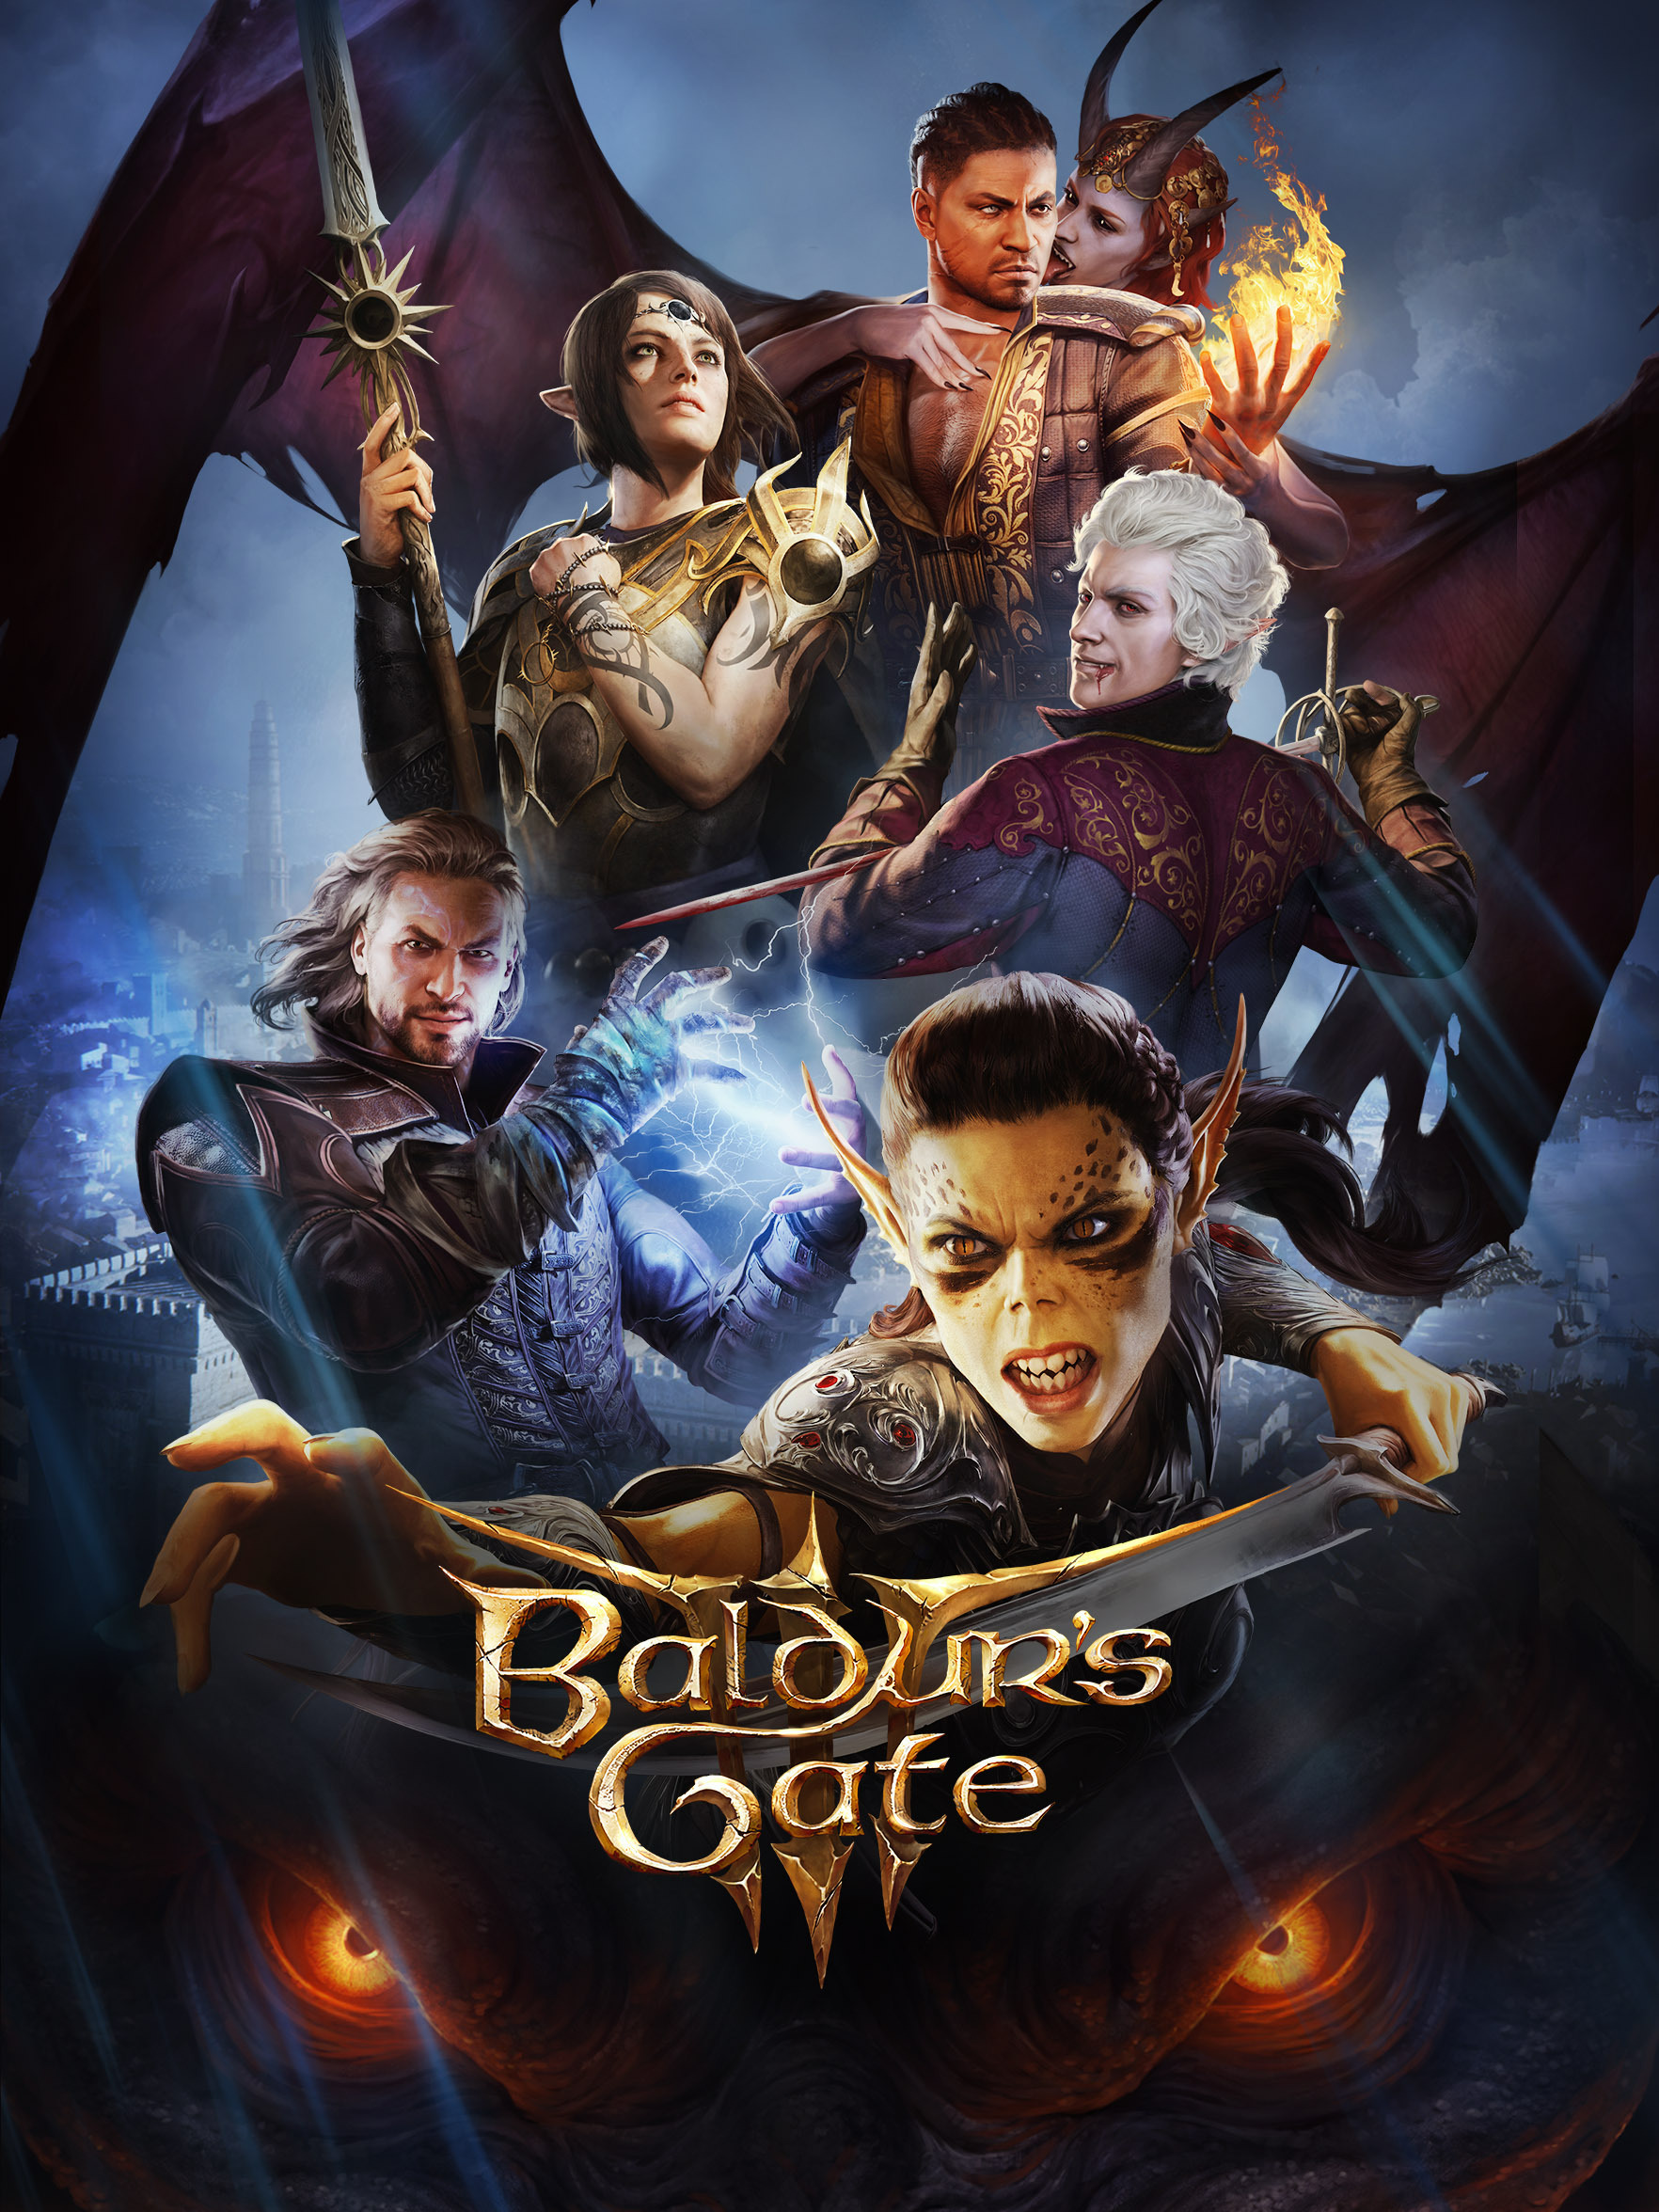 Baldur's Gate 3 on Steam